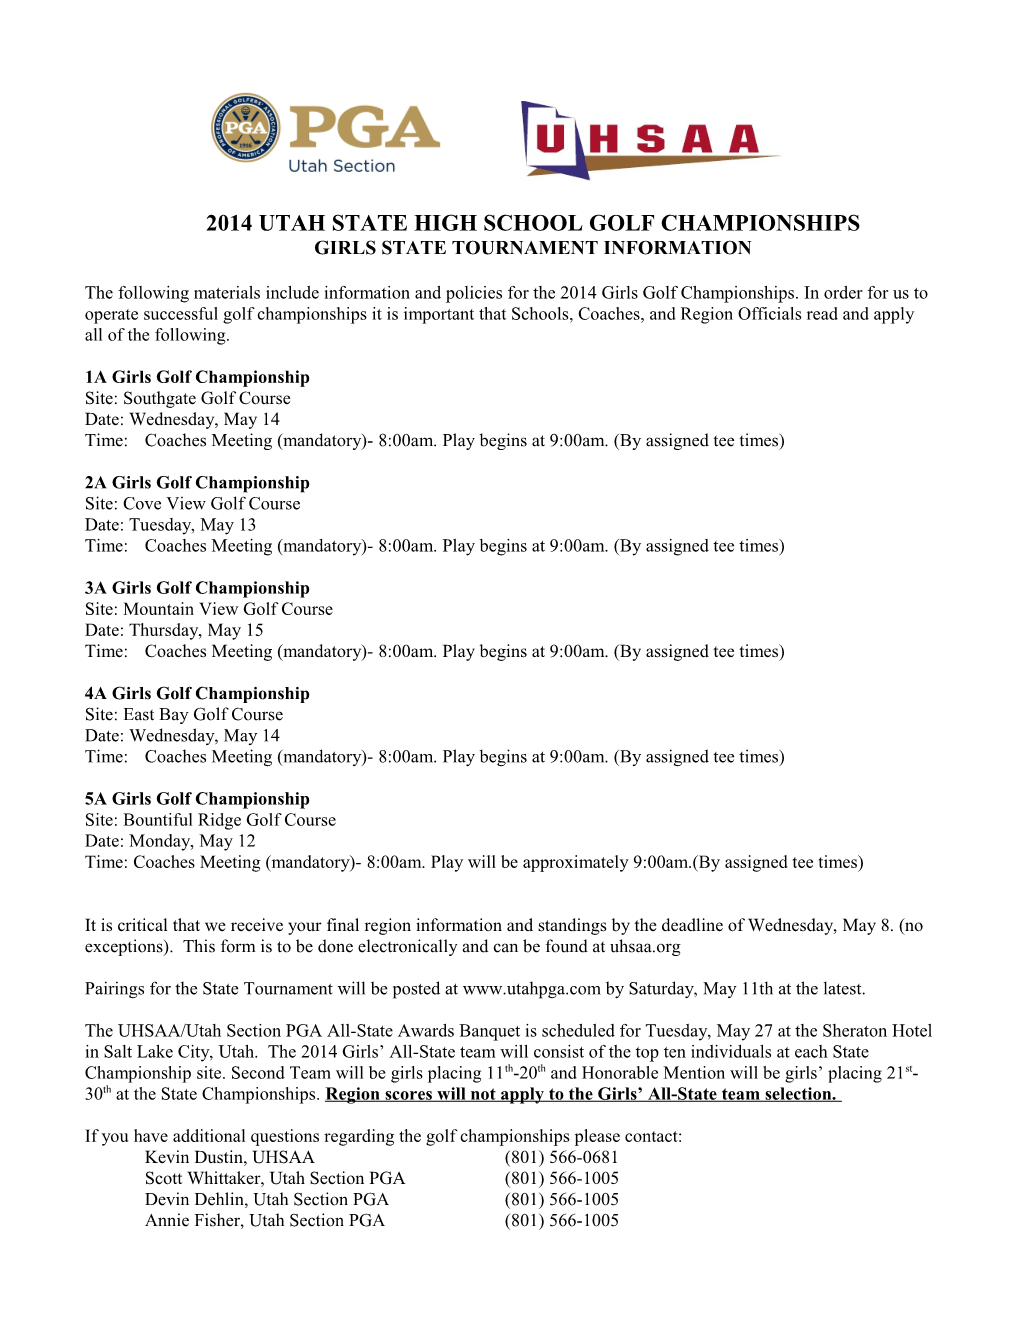 2014 Utah State High School Golf Championships